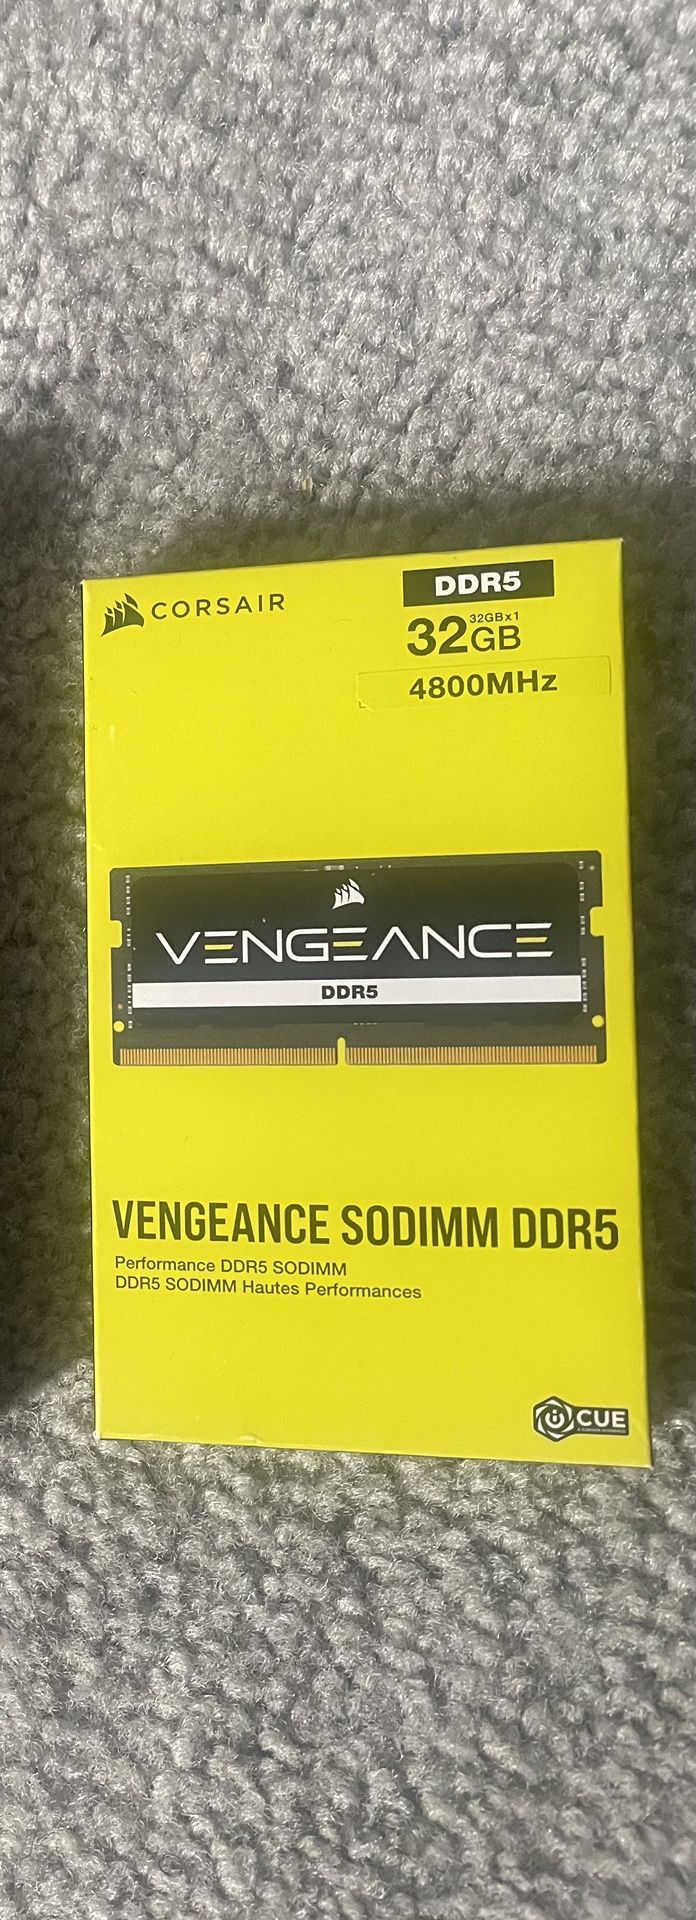 Corsair Vengeance DDR5 32GB 4800mhz 